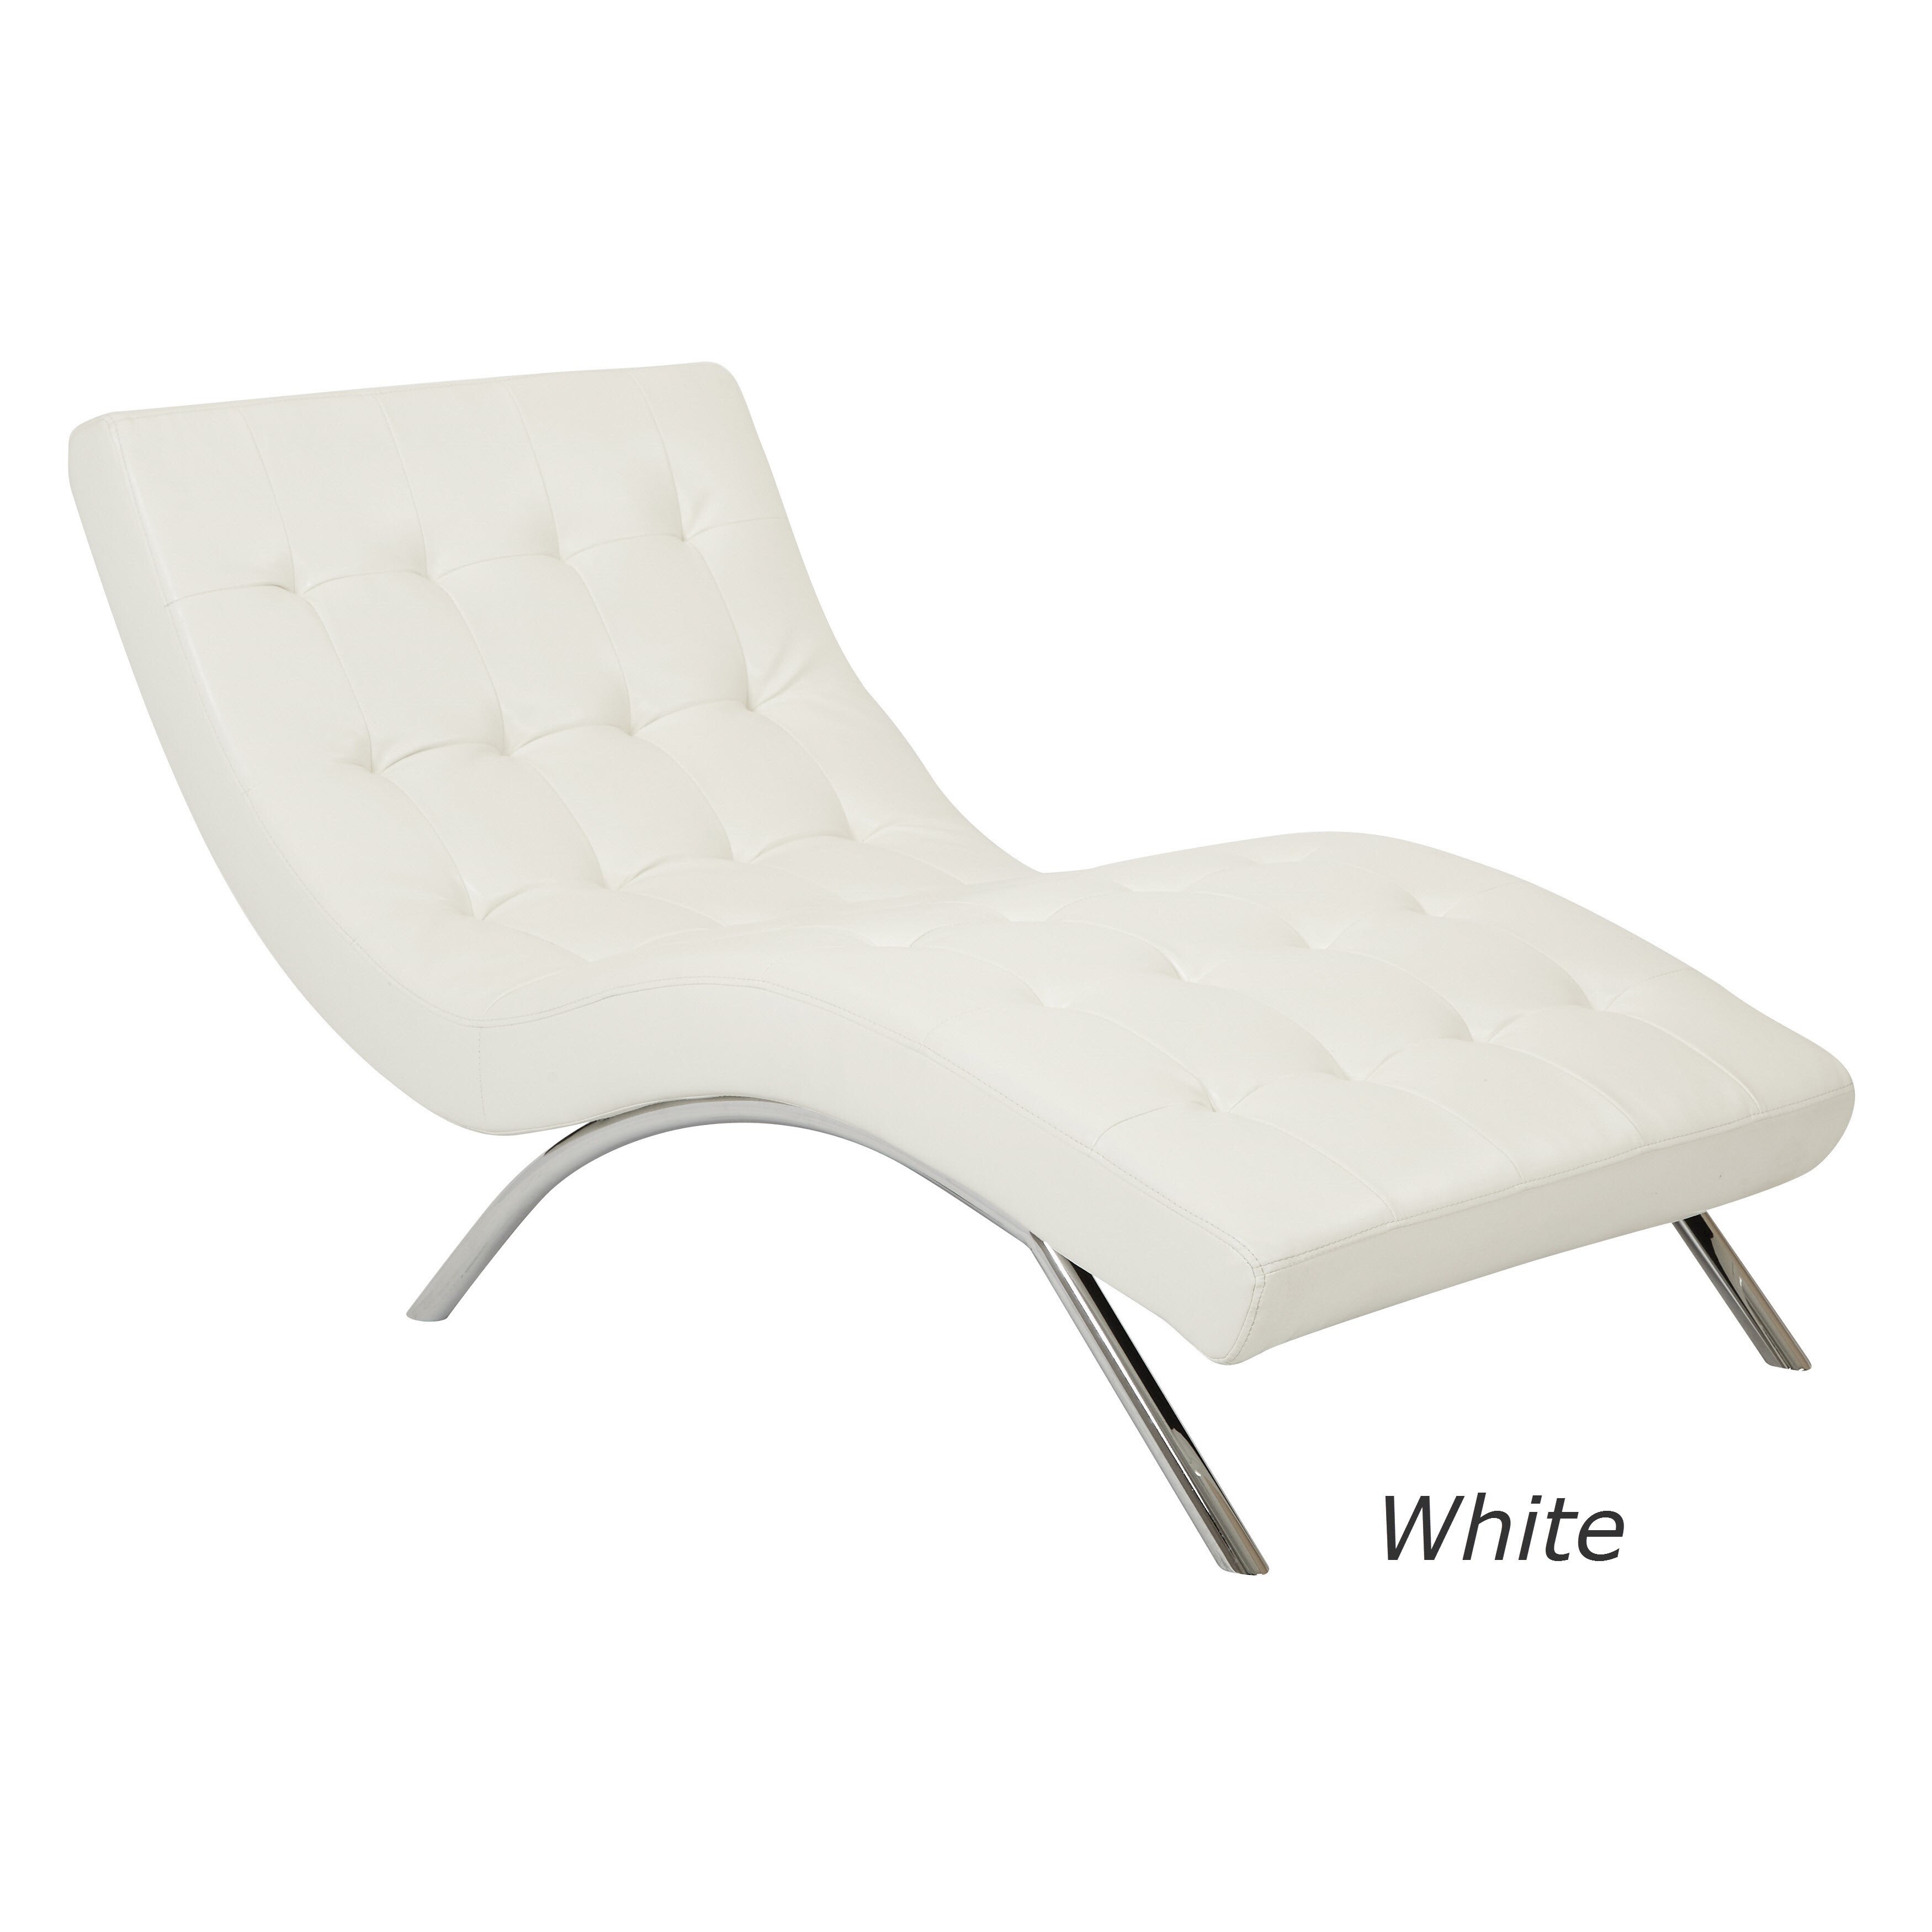 White Leather Chaise Lounge Sofa / This sofa chair preventing backache